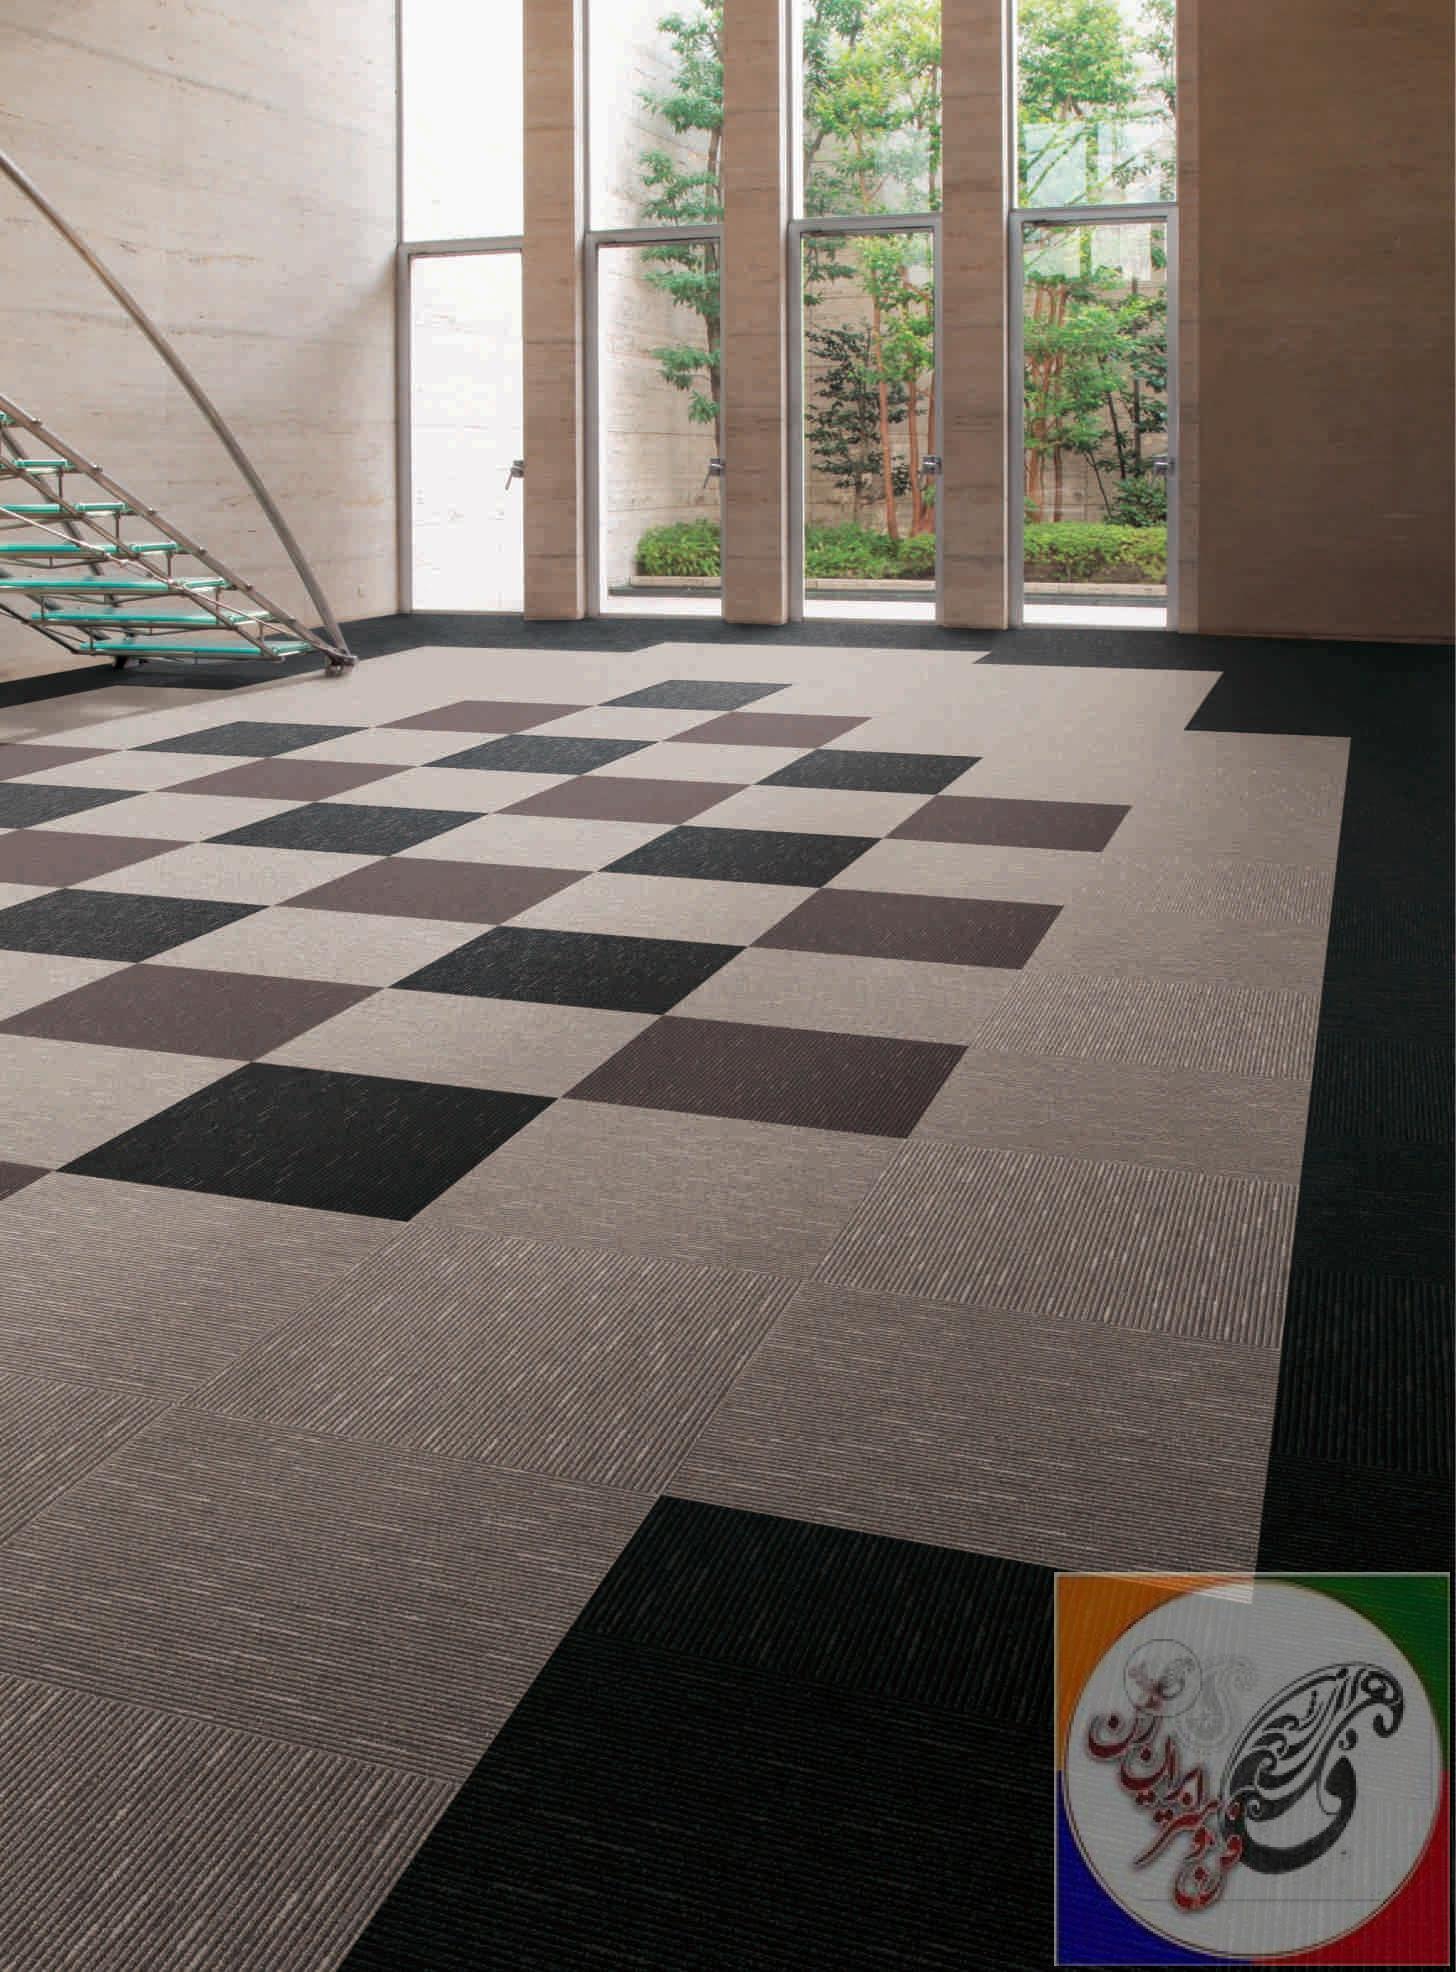 Carpet tiles design for your home decoration.